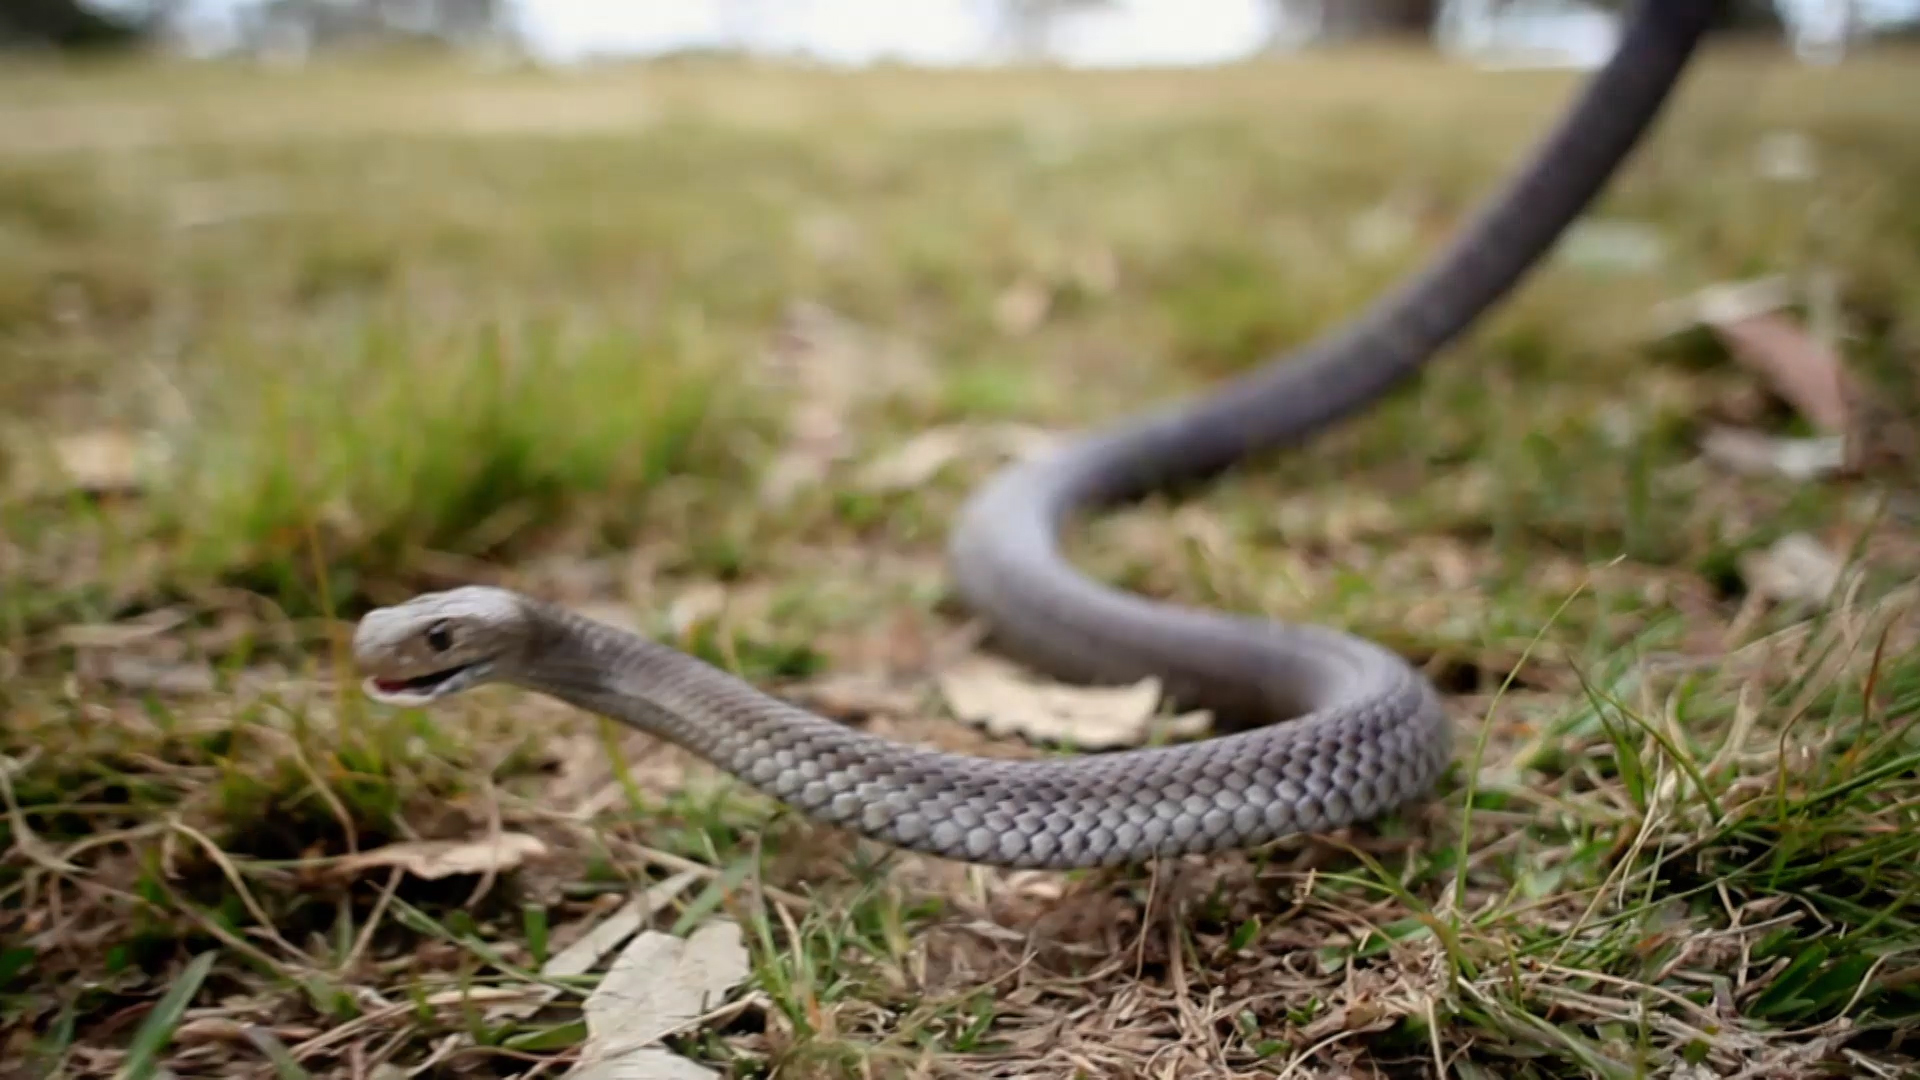 Red Bellied Black Snake - Australia's Deadliest Video - National ...